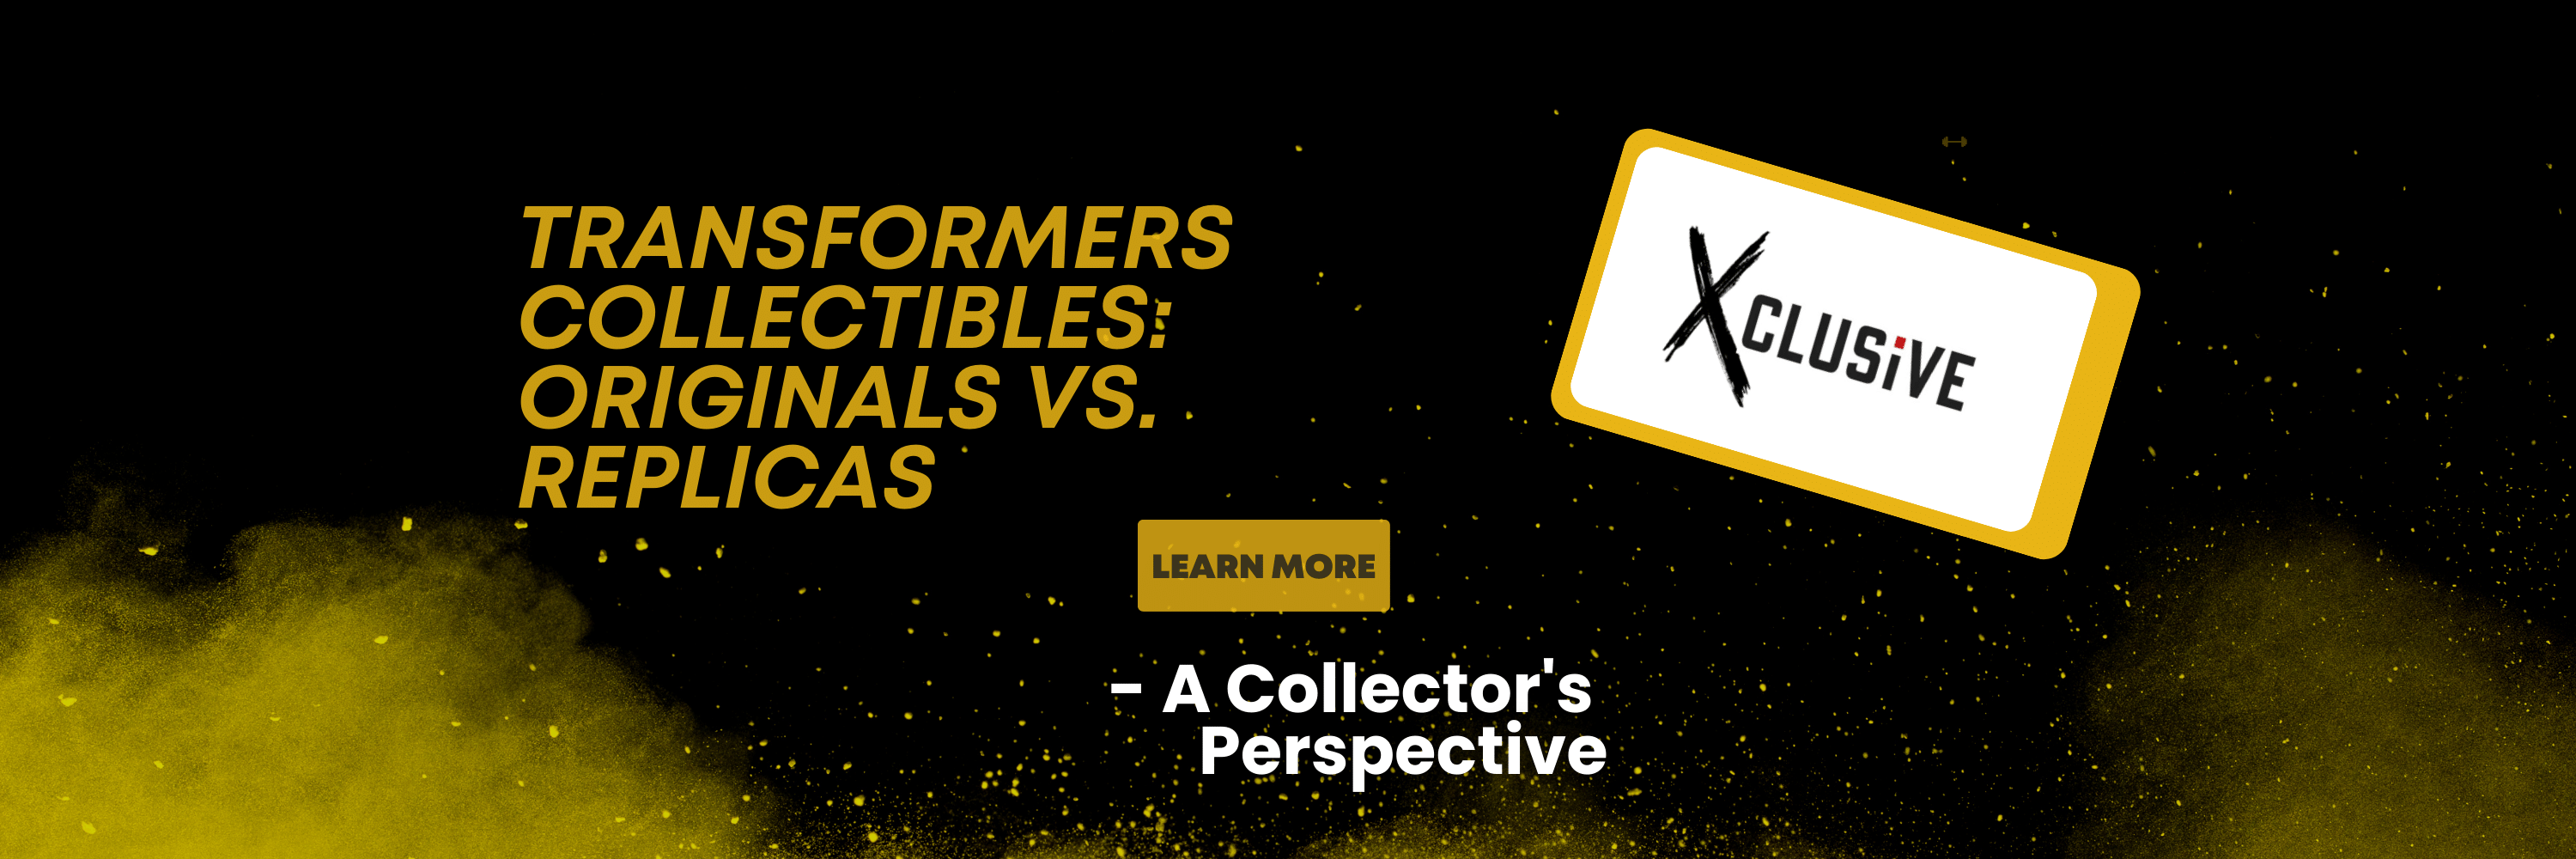 Transformers Collectibles: Originals vs. Replicas